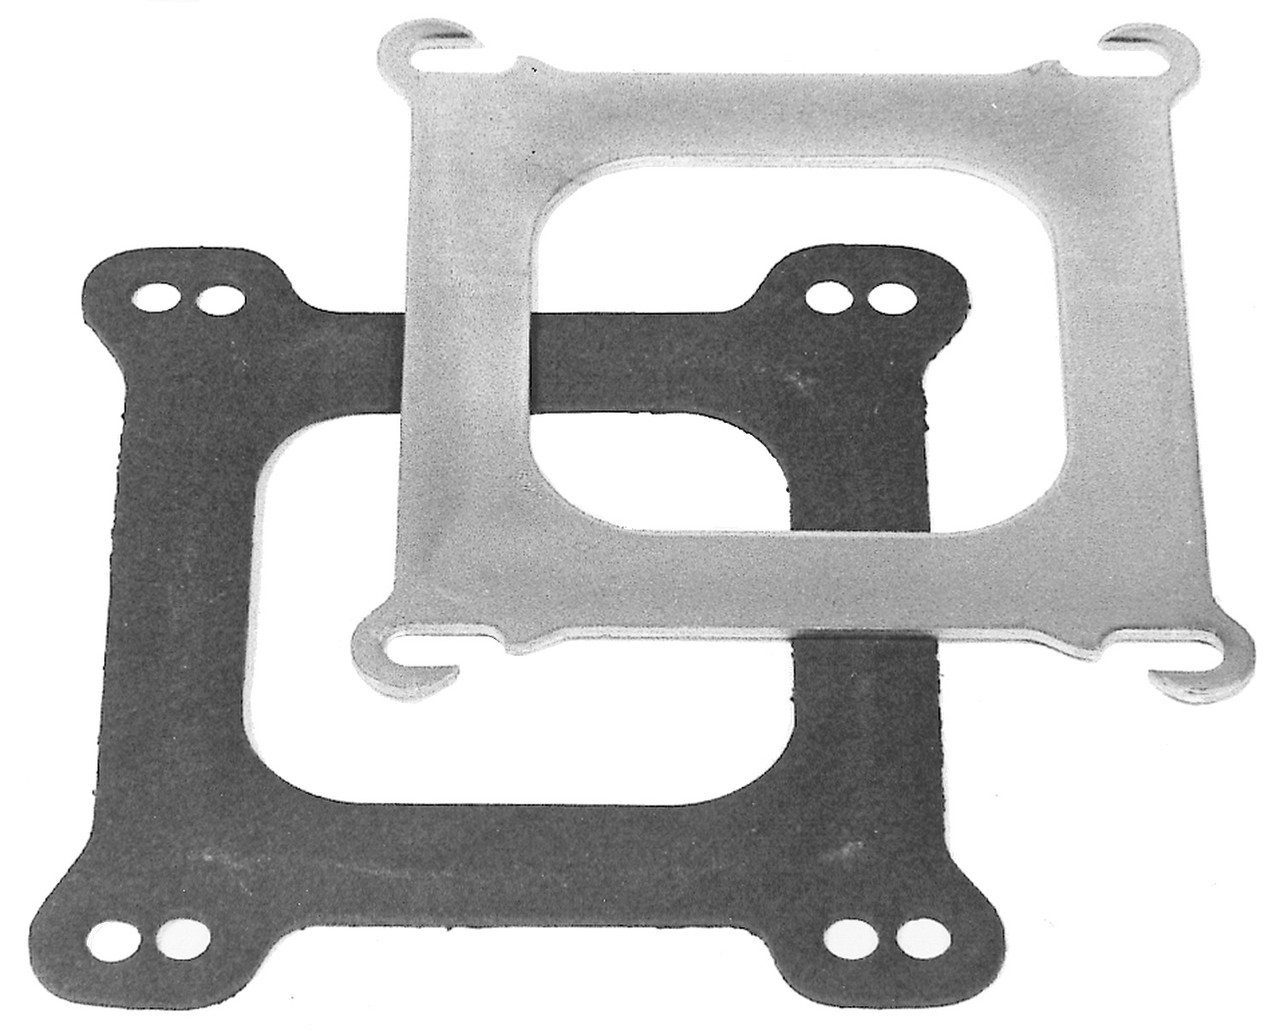 Edelbrock 2732 Carburetor Adapter Plate